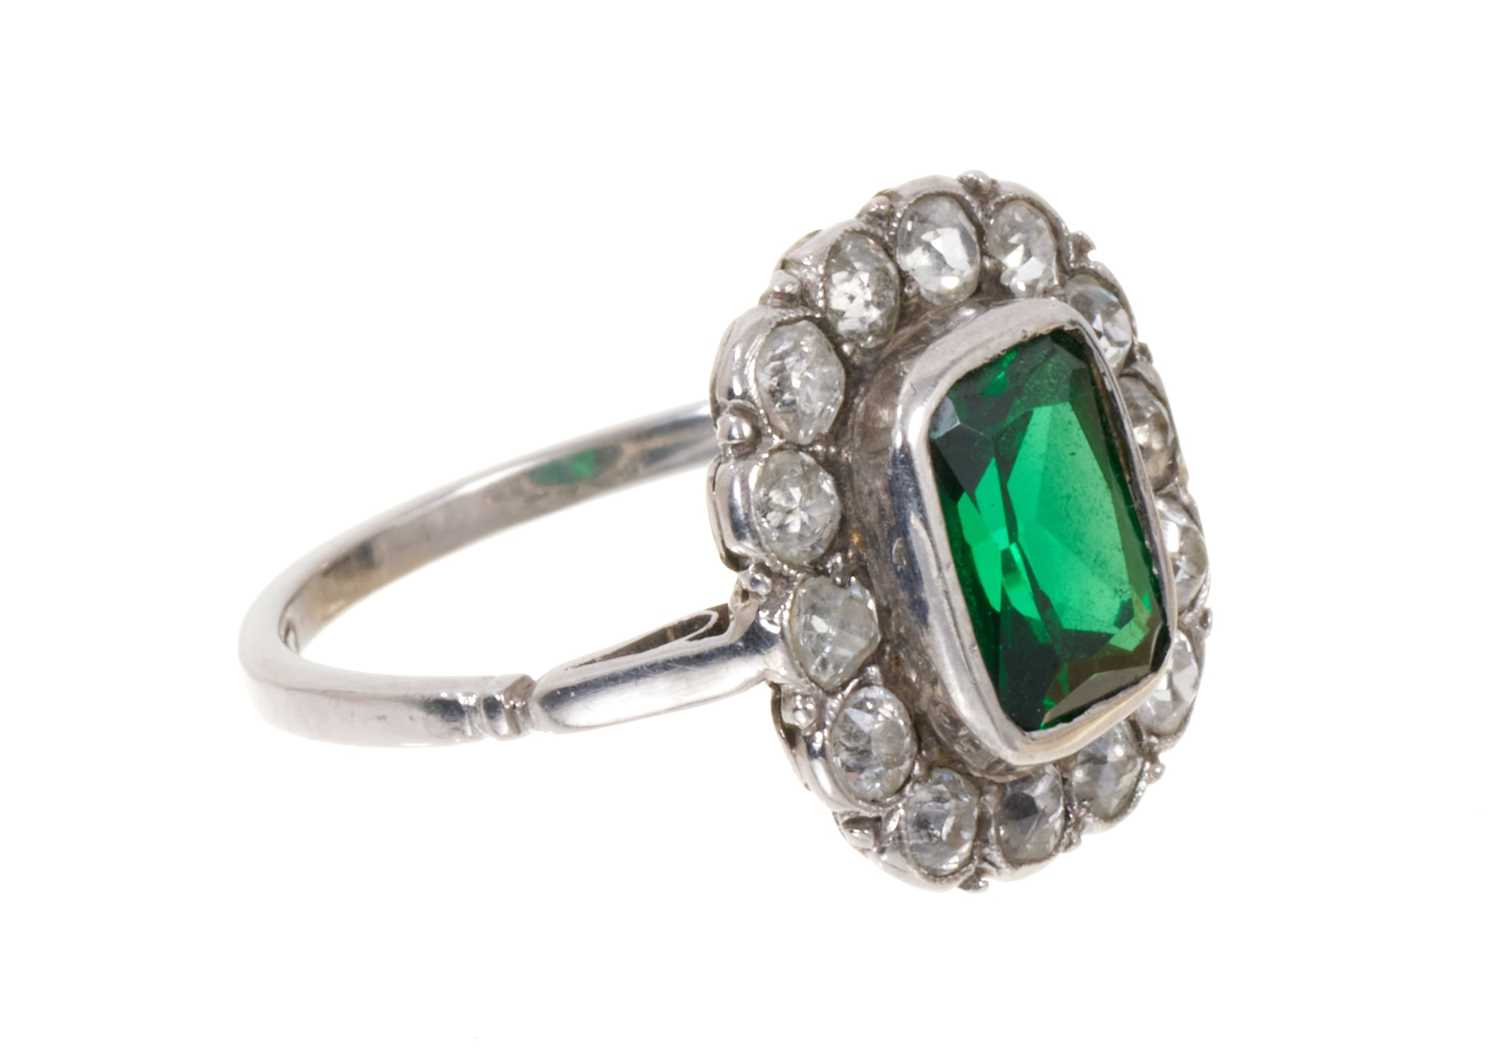 1920s diamond and green stone platinum ring - Image 2 of 4